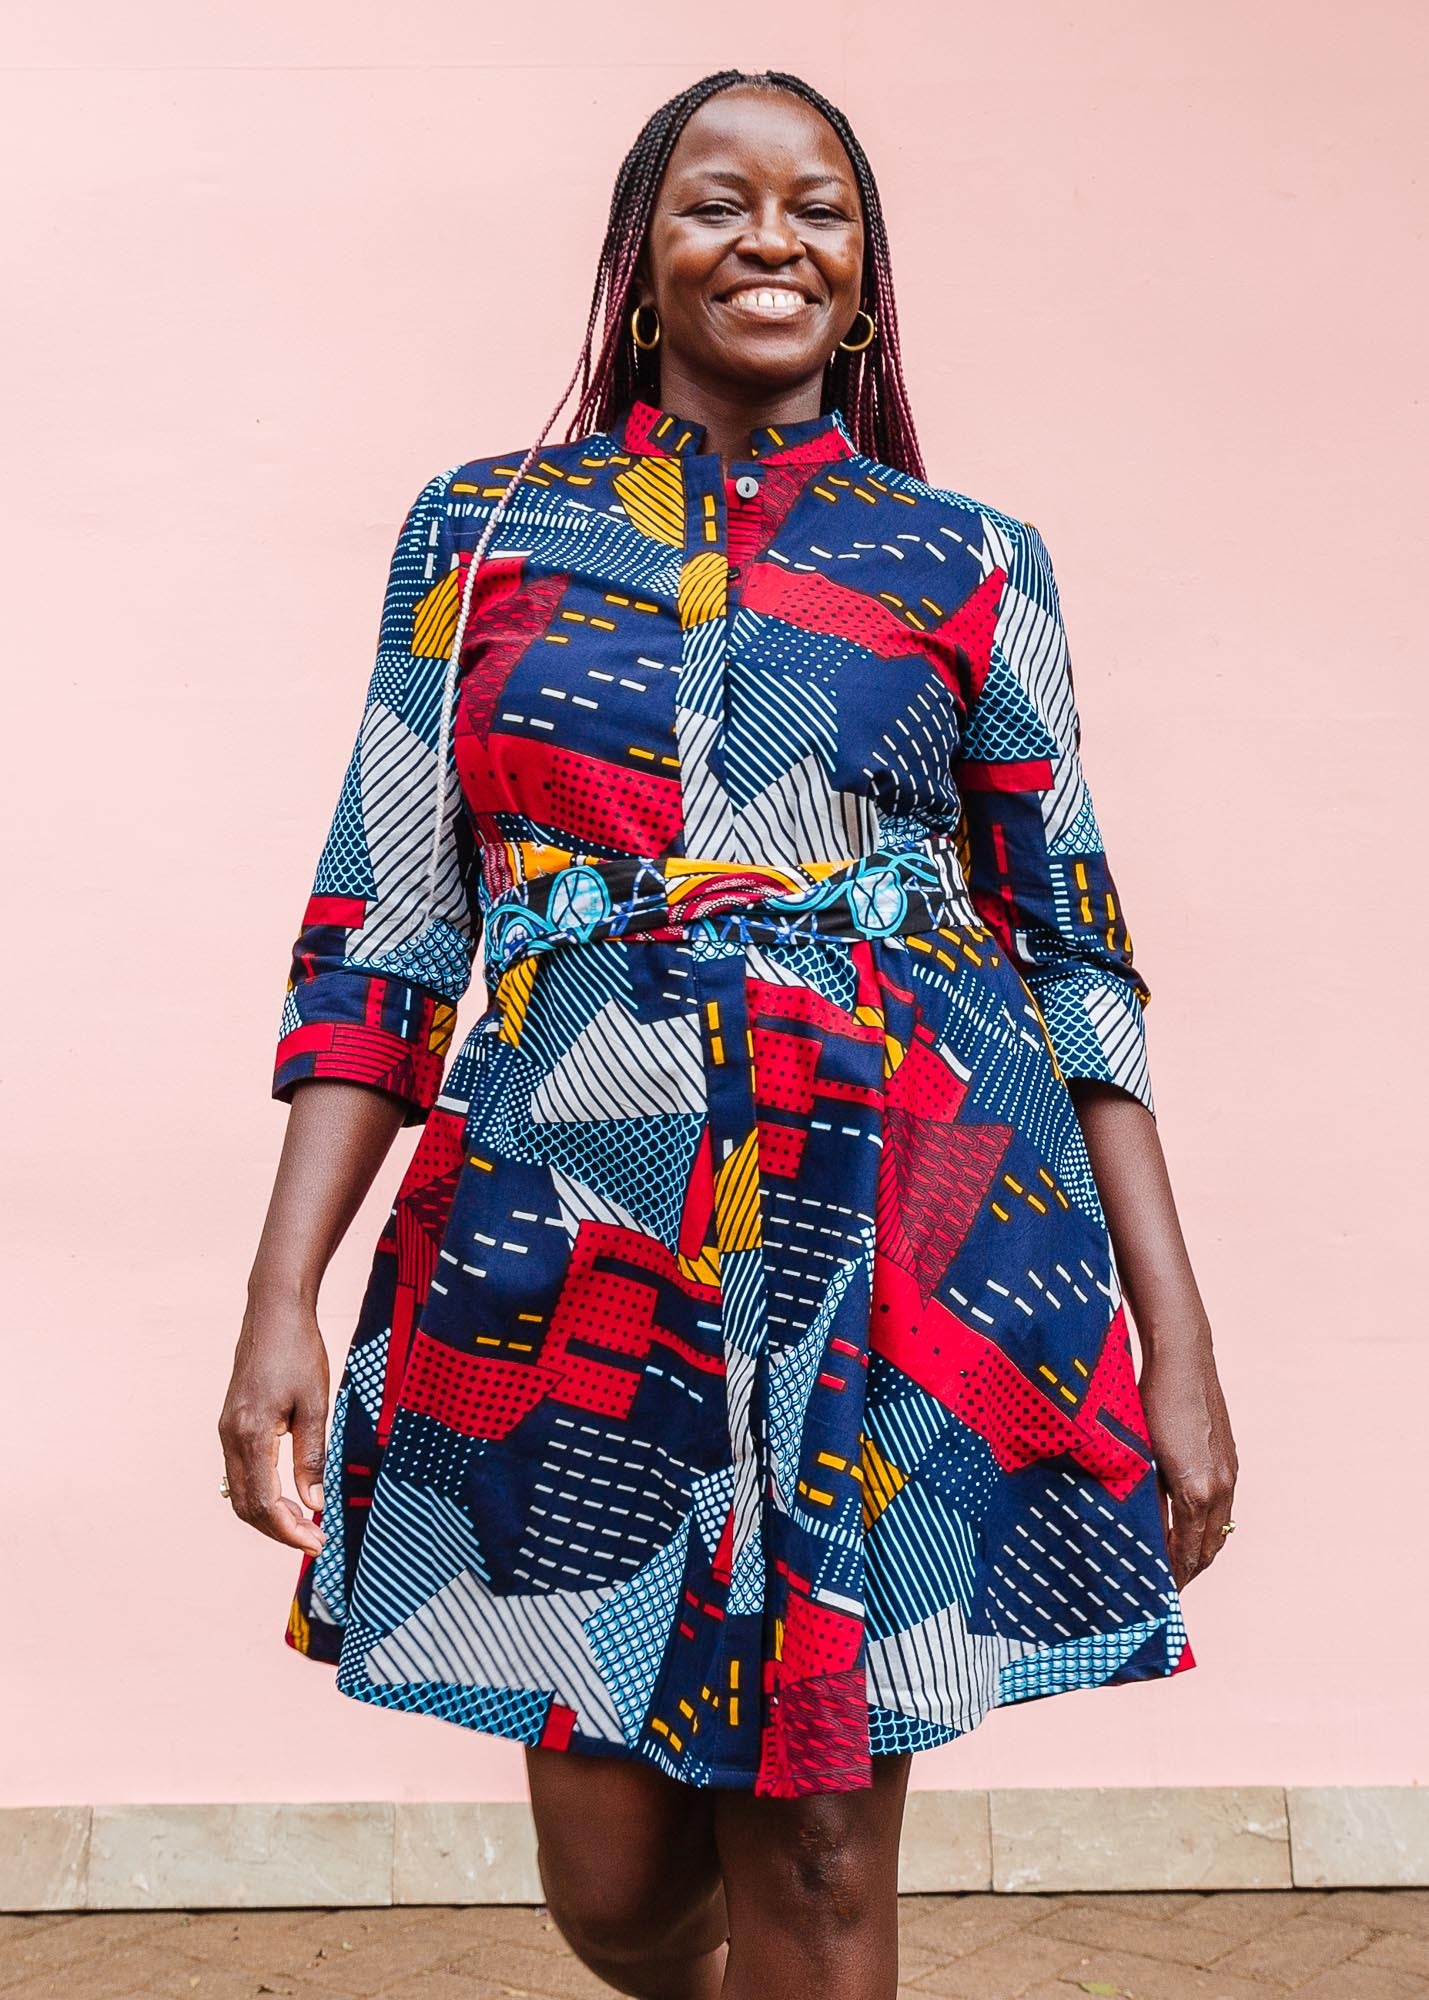 The model is wearing multi-colored geometric print dress